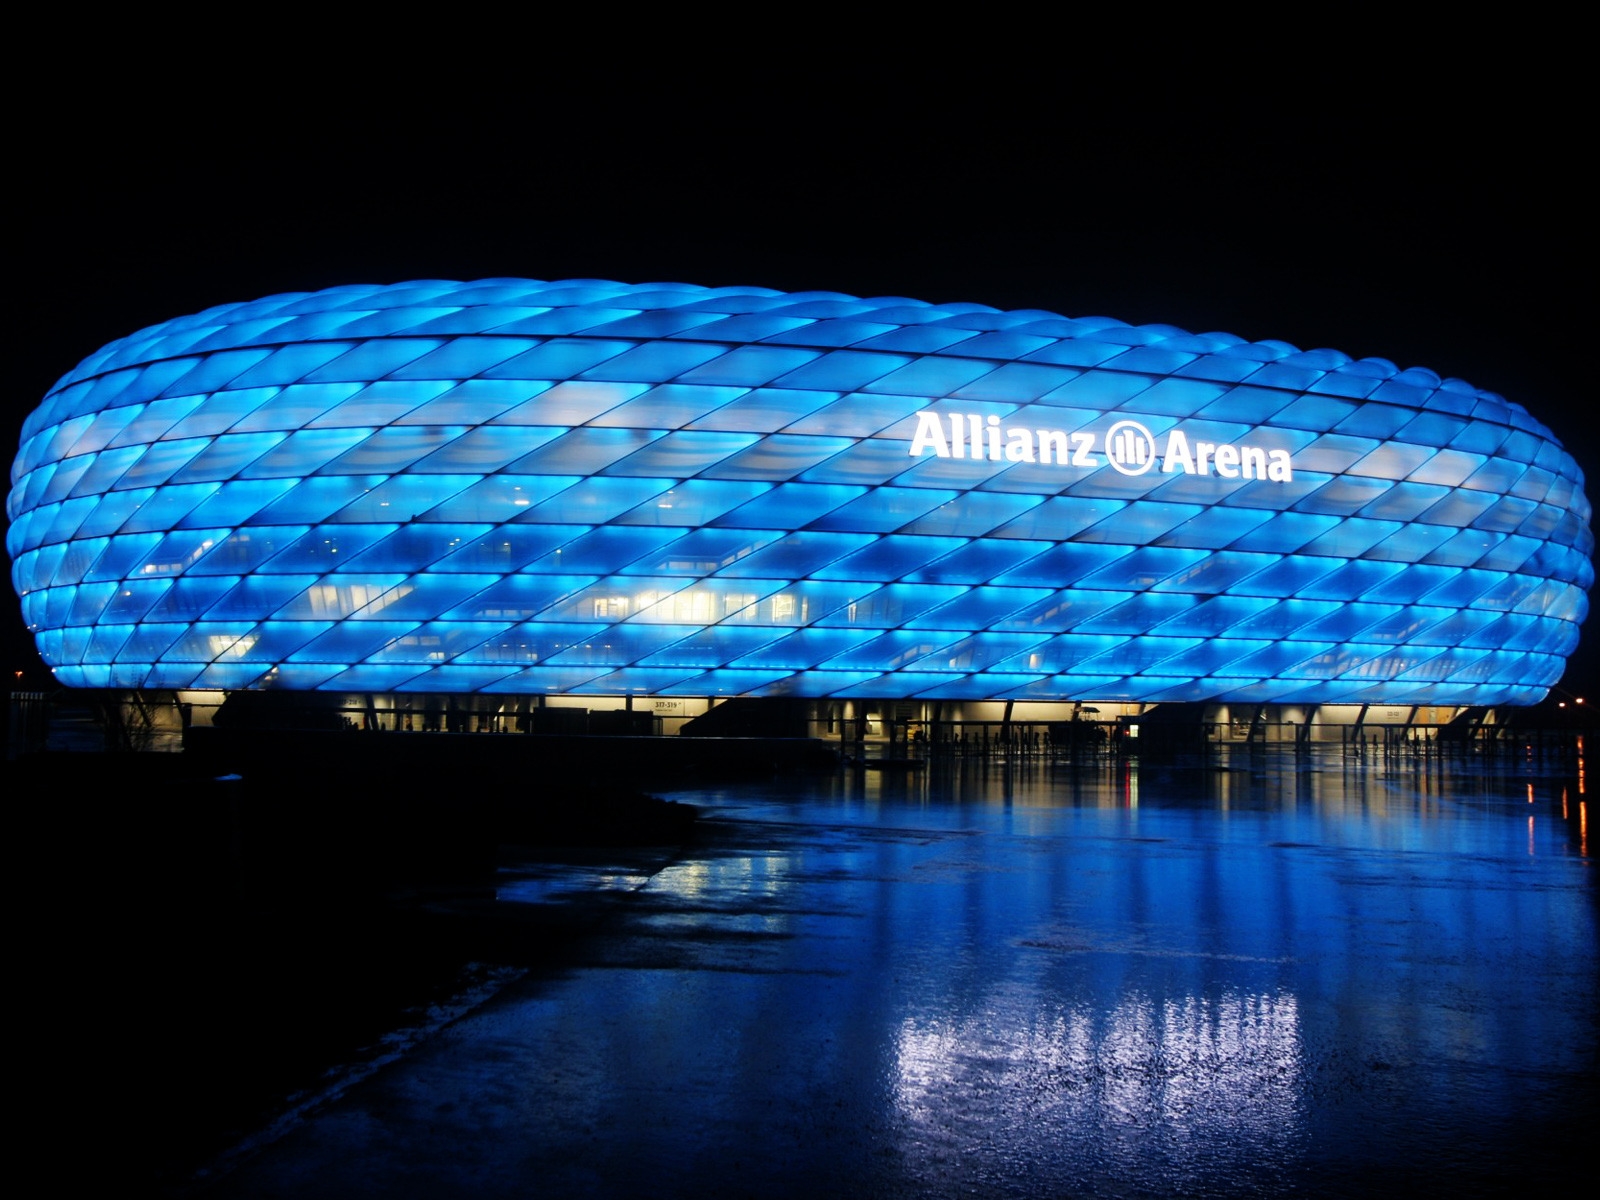 The Allianz Arena Munich for 1600 x 1200 resolution